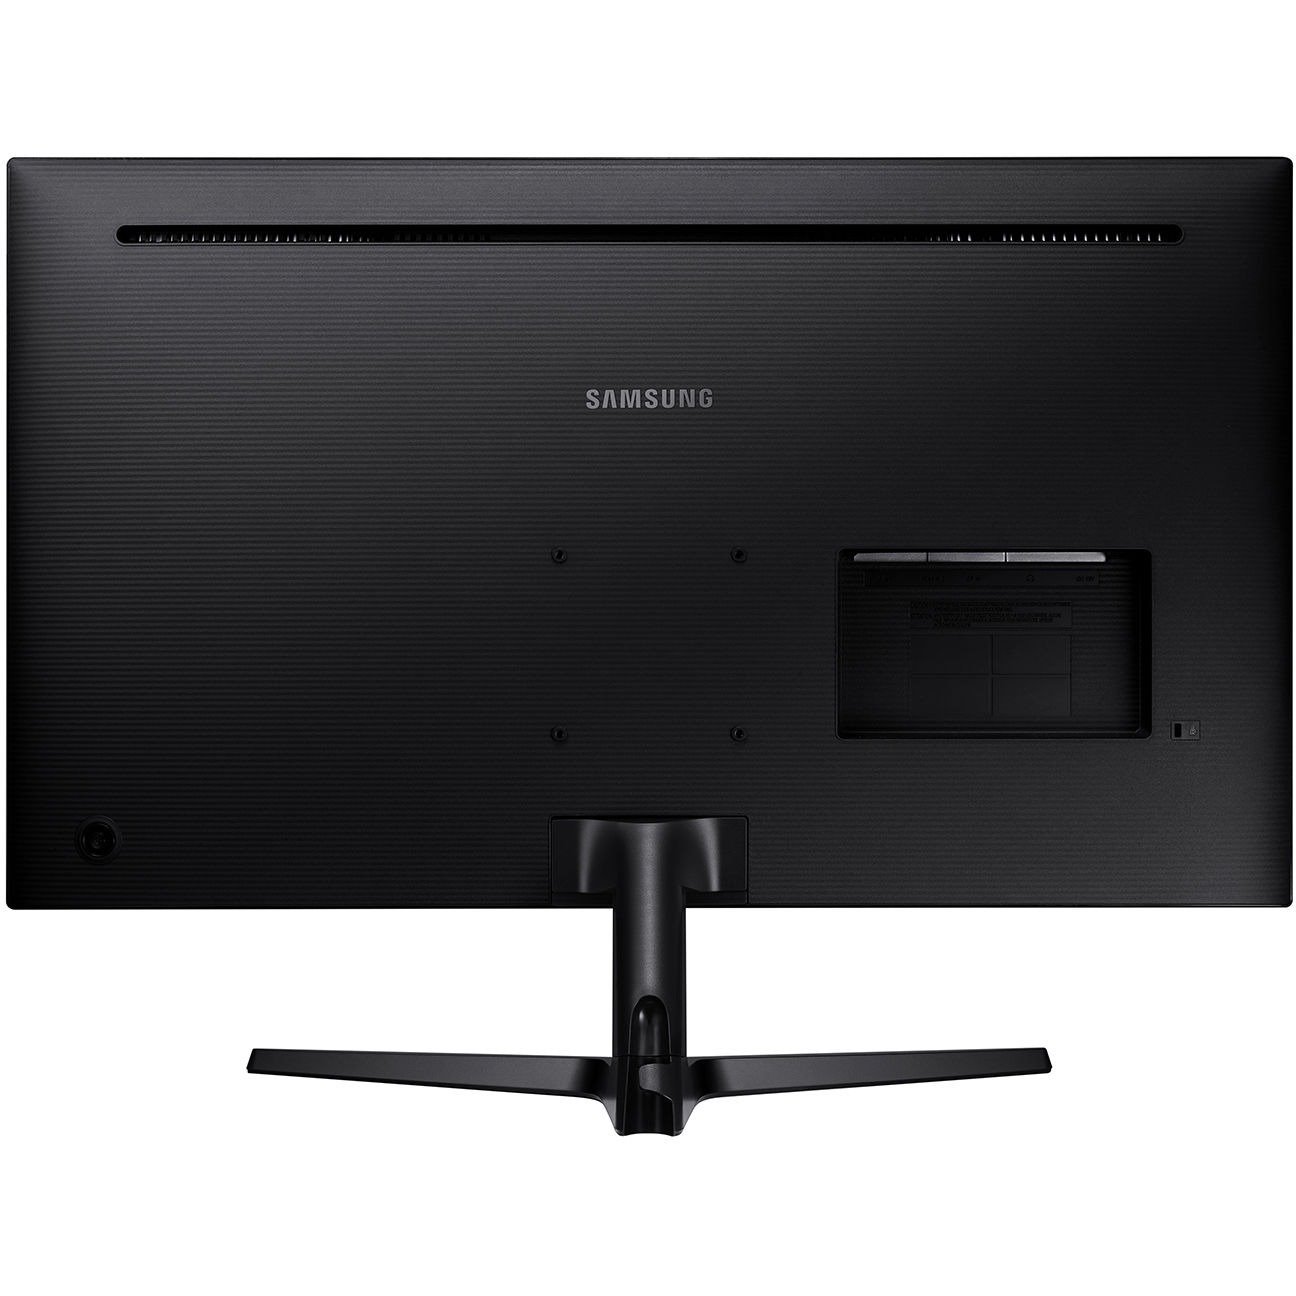 Samsung LU32J590UQNXZA 32" Class WQUXGA Gaming LCD Monitor - 16:9 - Dark Blue Gray